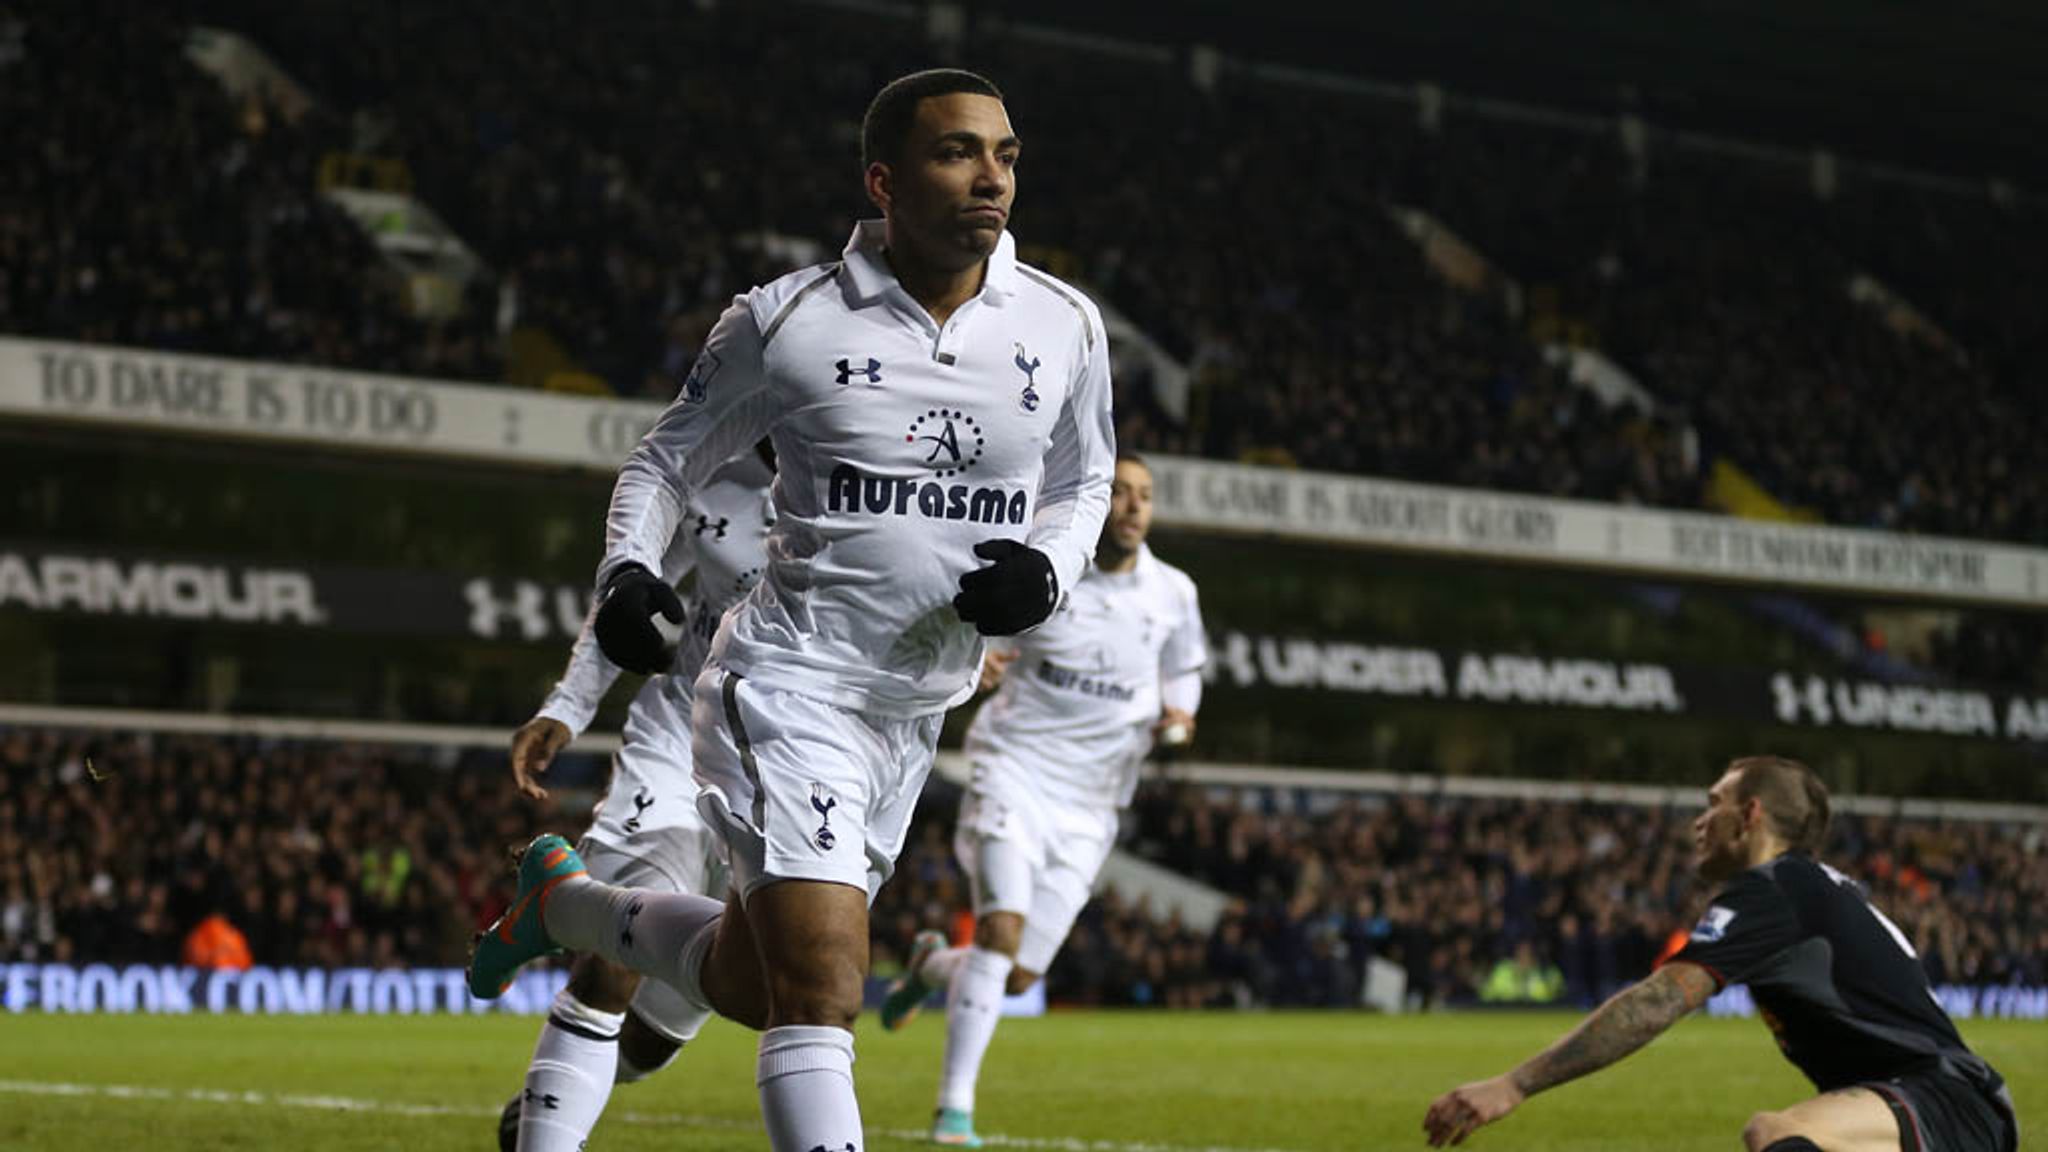 Tottenham boss Andre Villas-Boas hails Aaron Lennon after victory over Reading | Football News | Sky Sports